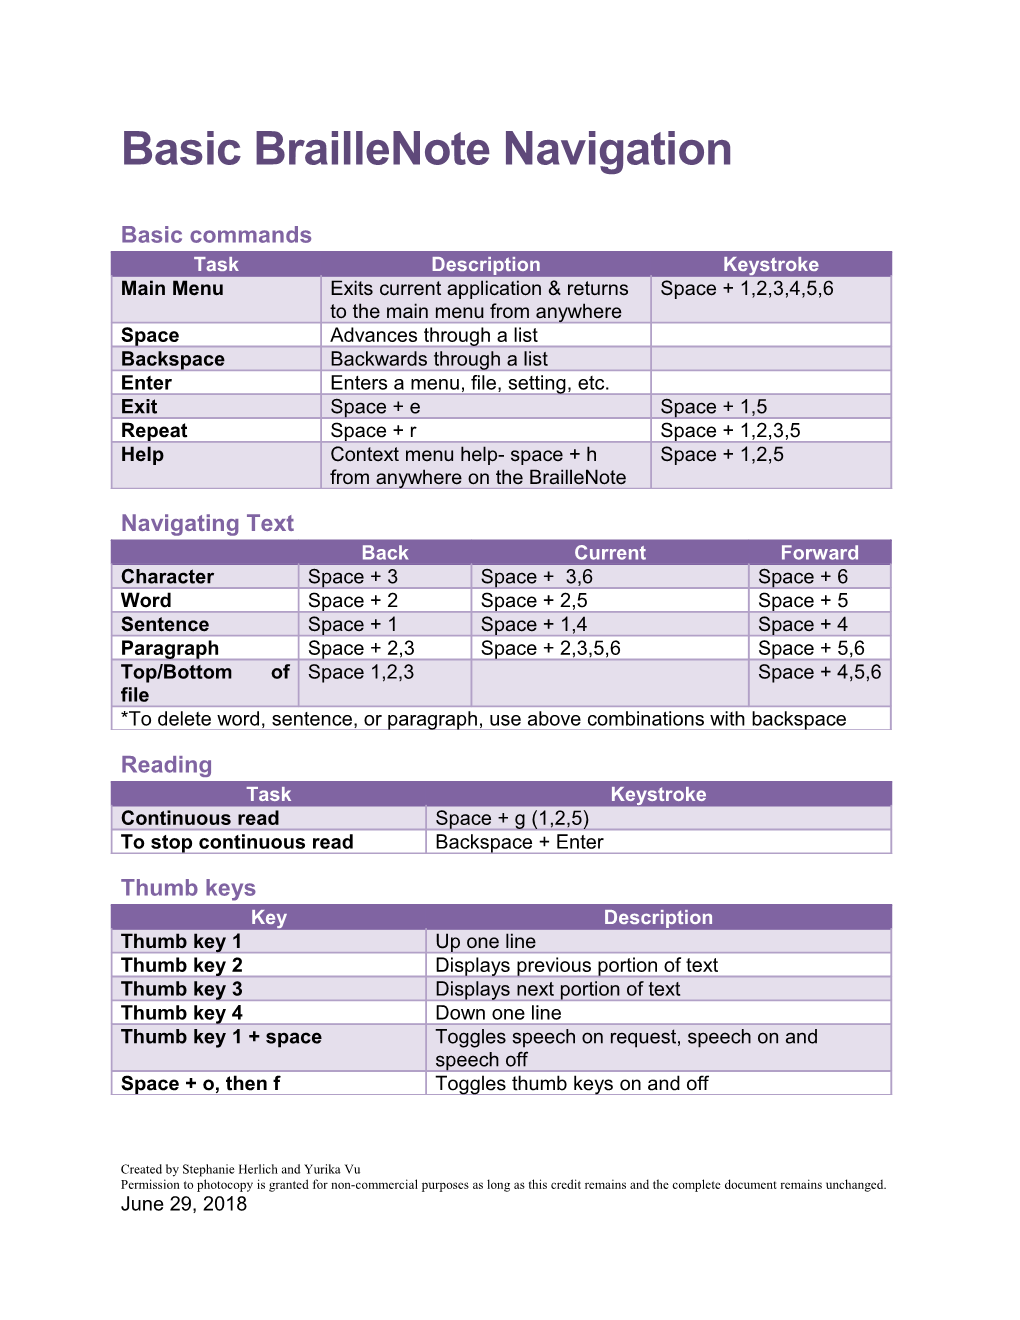 Basic Braillenote Navigation